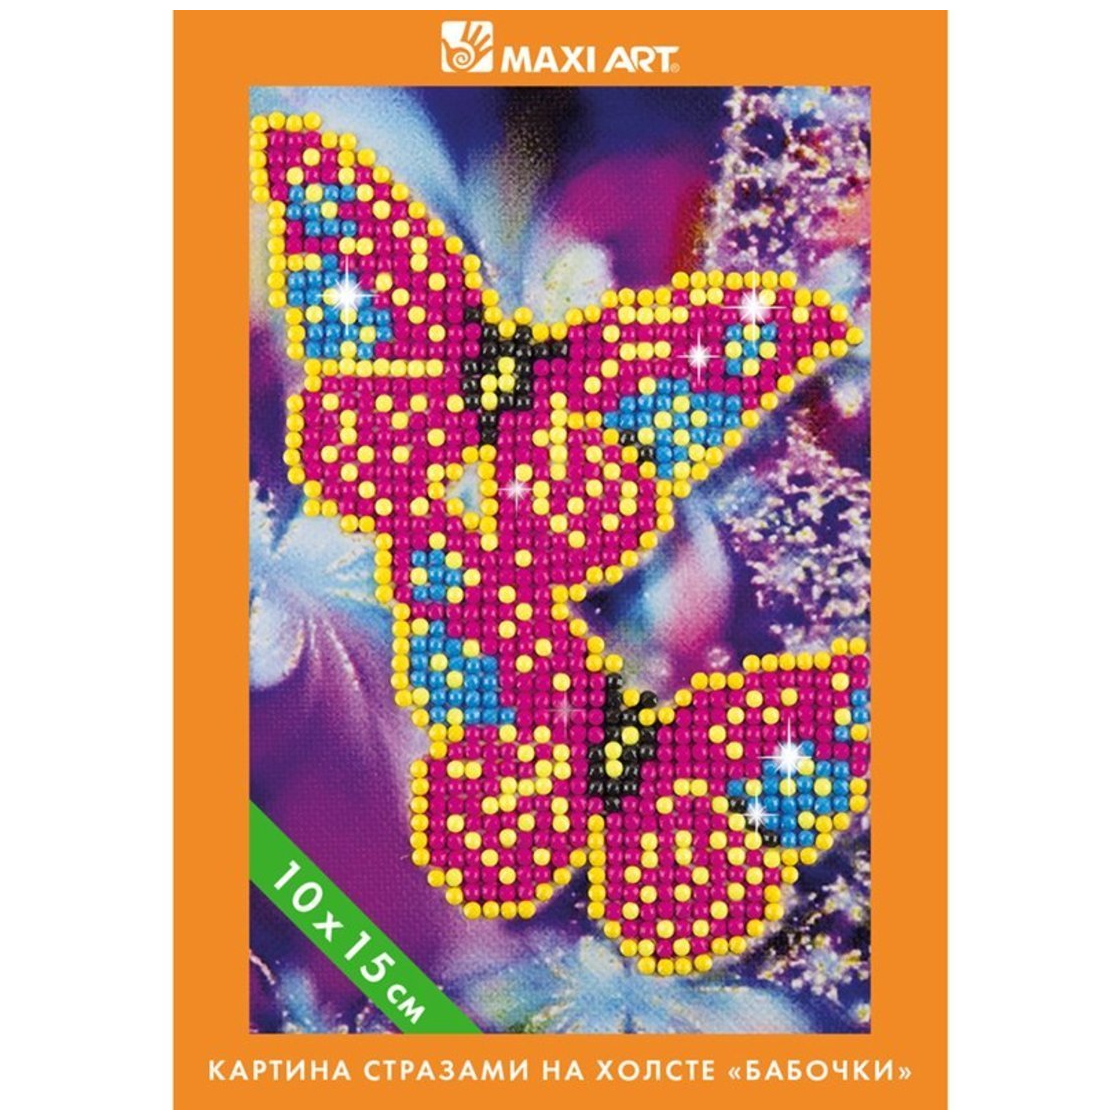 Картина стразами на холсте Maxi Art Бабочки, 10х15 см картина кристаллами maxi art петушок 10х15 см